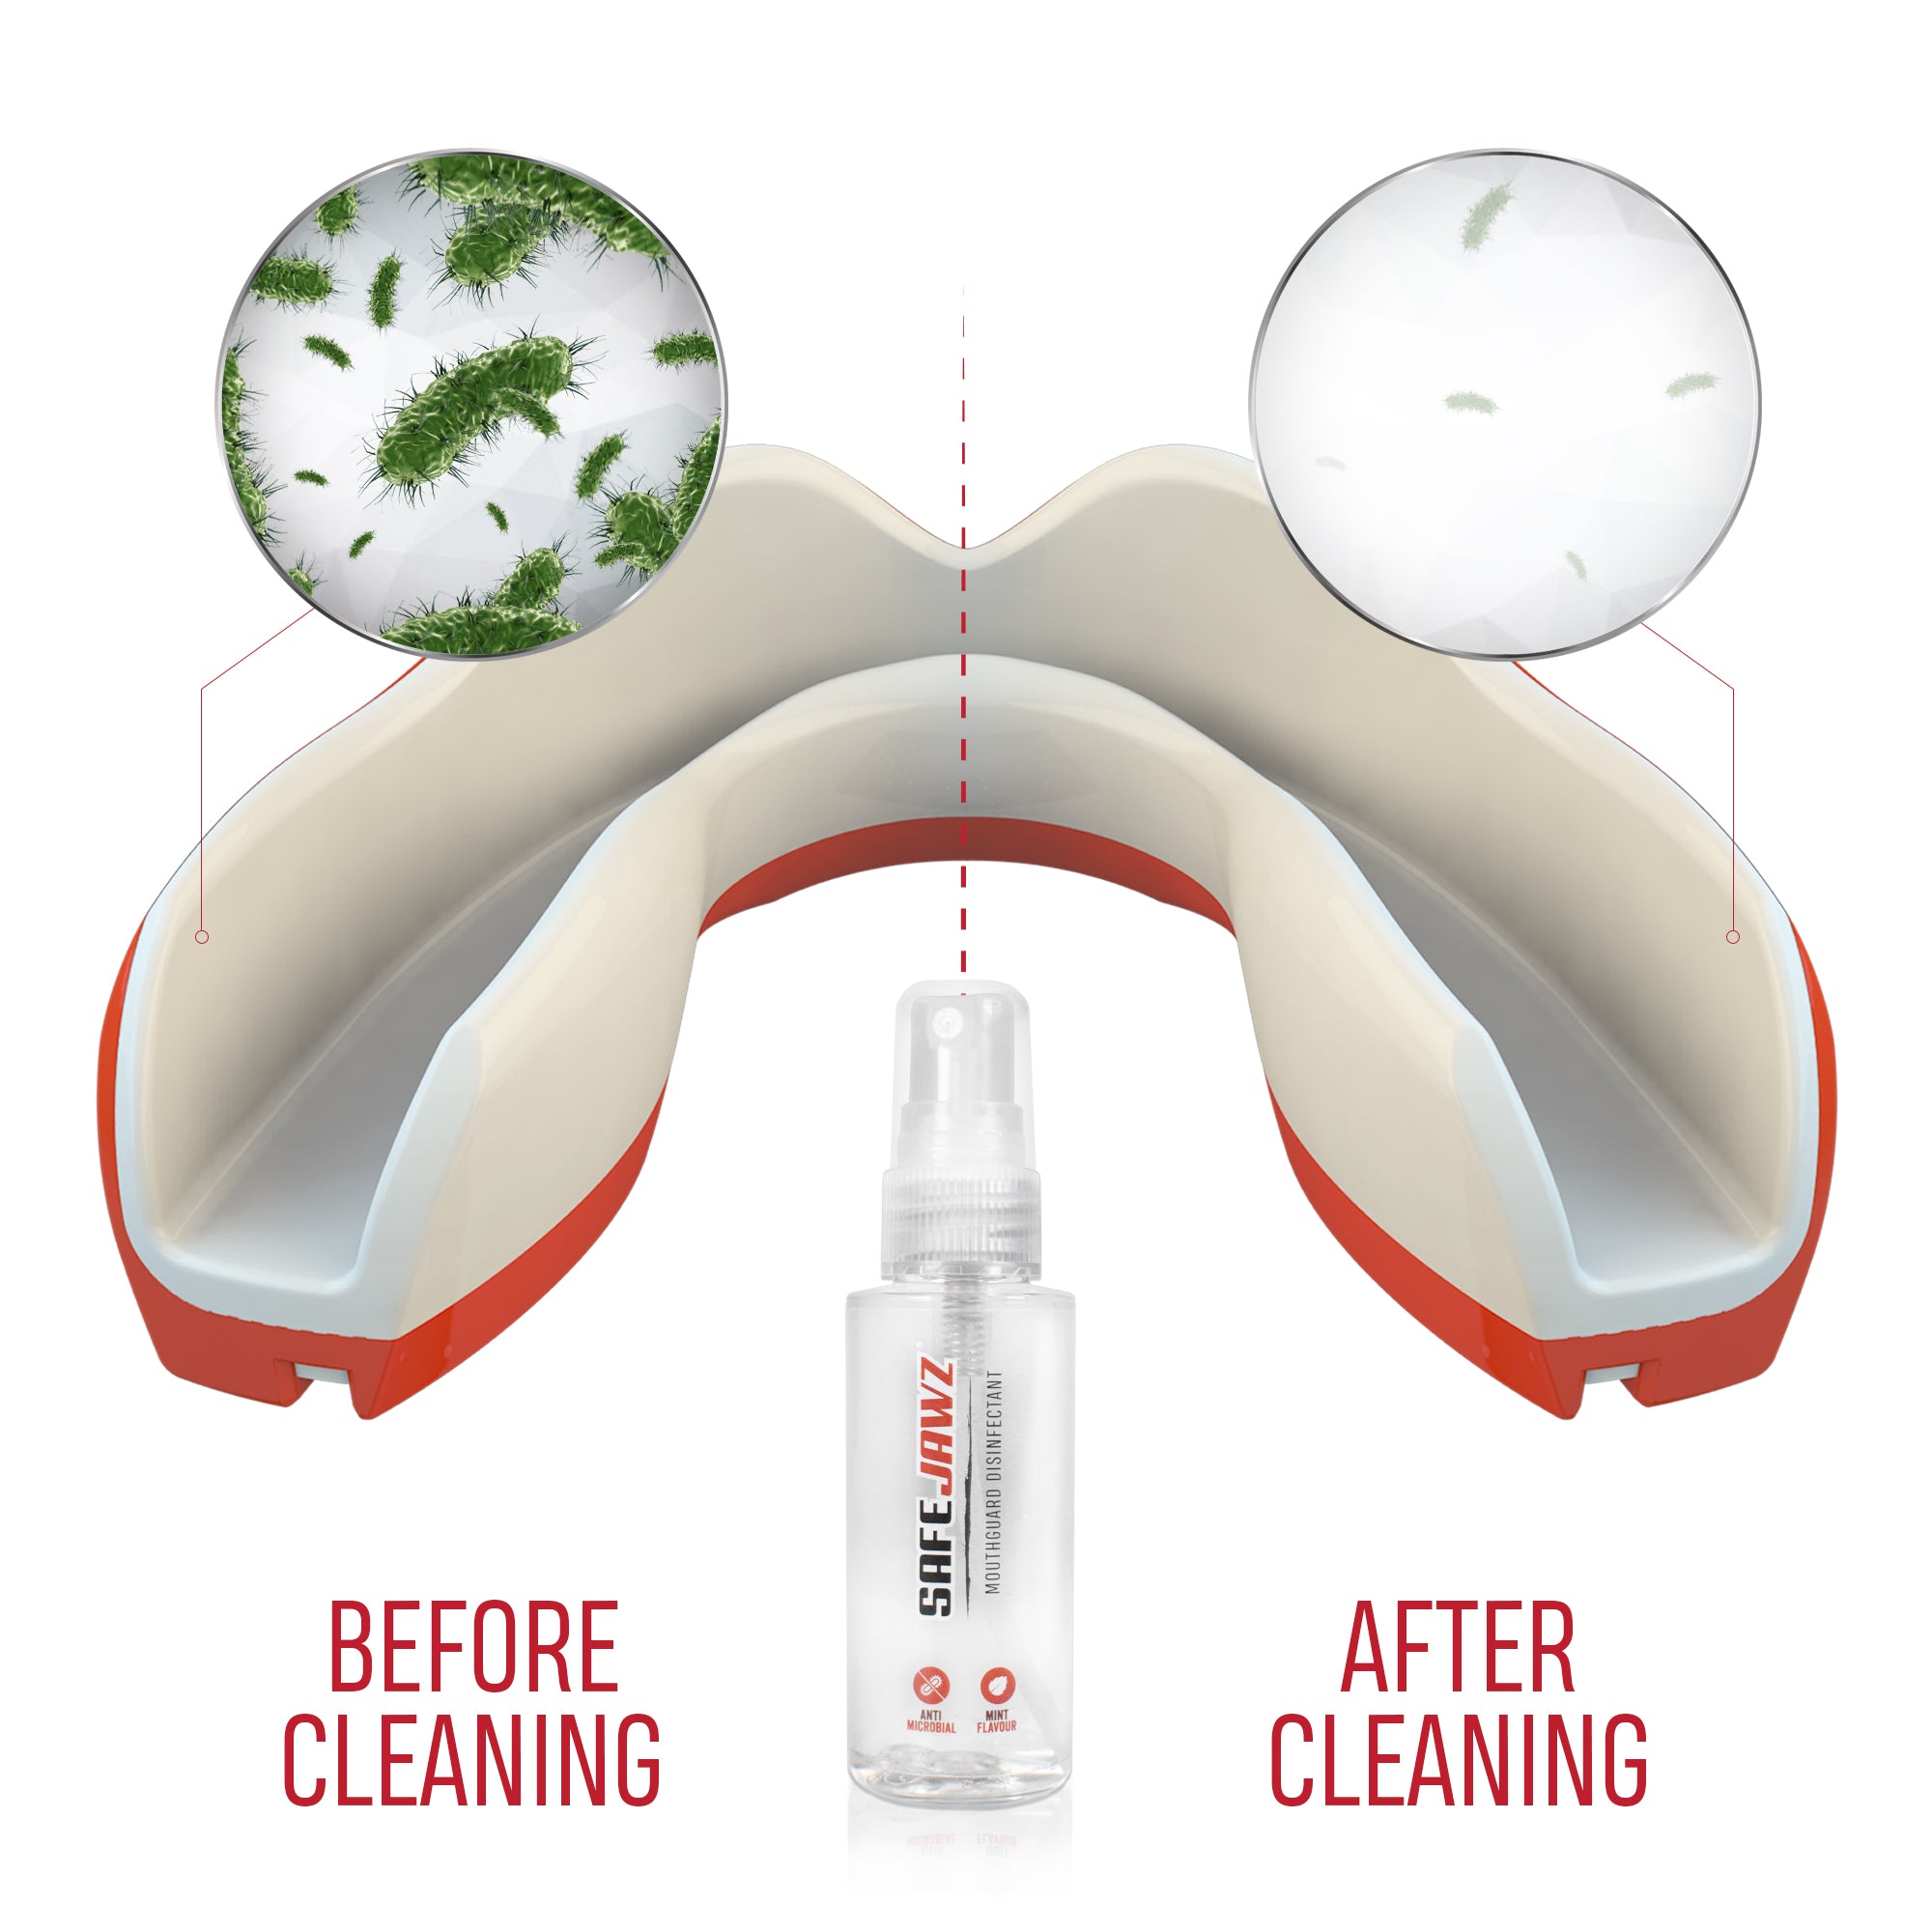 SAFEJAWZ Mouthguard Disinfectant Spray. Mint Flavoured, Anti-Microbial Gum Shield Cleaner. 50ml. - SAFEJAWZ gum shield